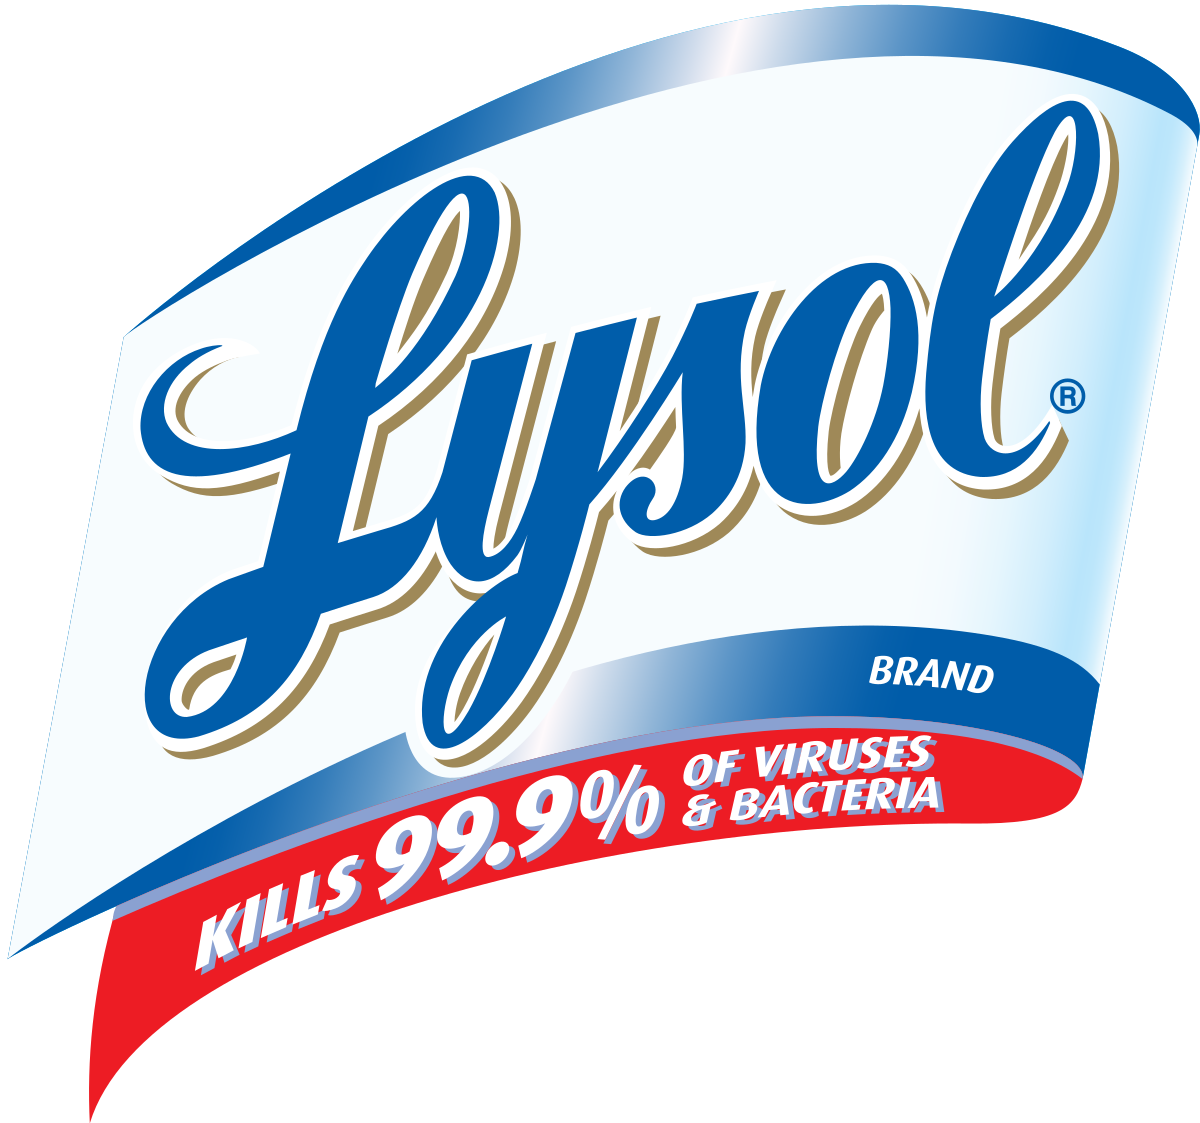 Lysol All Purpose Cleaner Spray, Cherry Blossom & Pomegranate, 19 oz